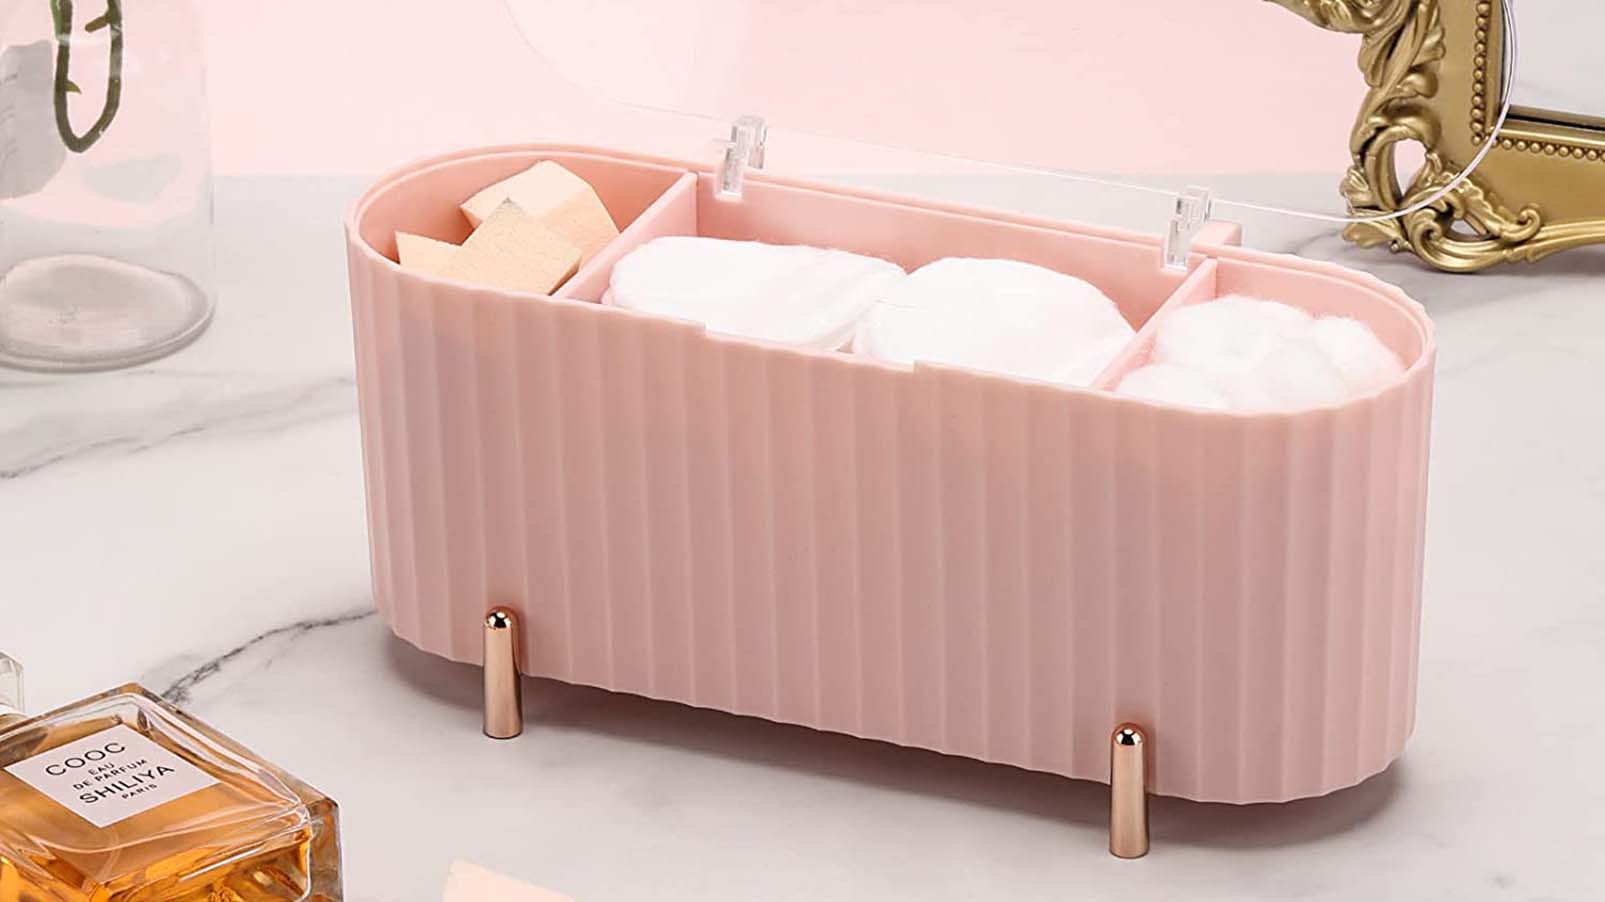 https://media.cnn.com/api/v1/images/stellar/prod/230217155203-amazon-tecbeauty-3-grids-separate-bathroom-organizer-canisters-pink.jpg?c=original